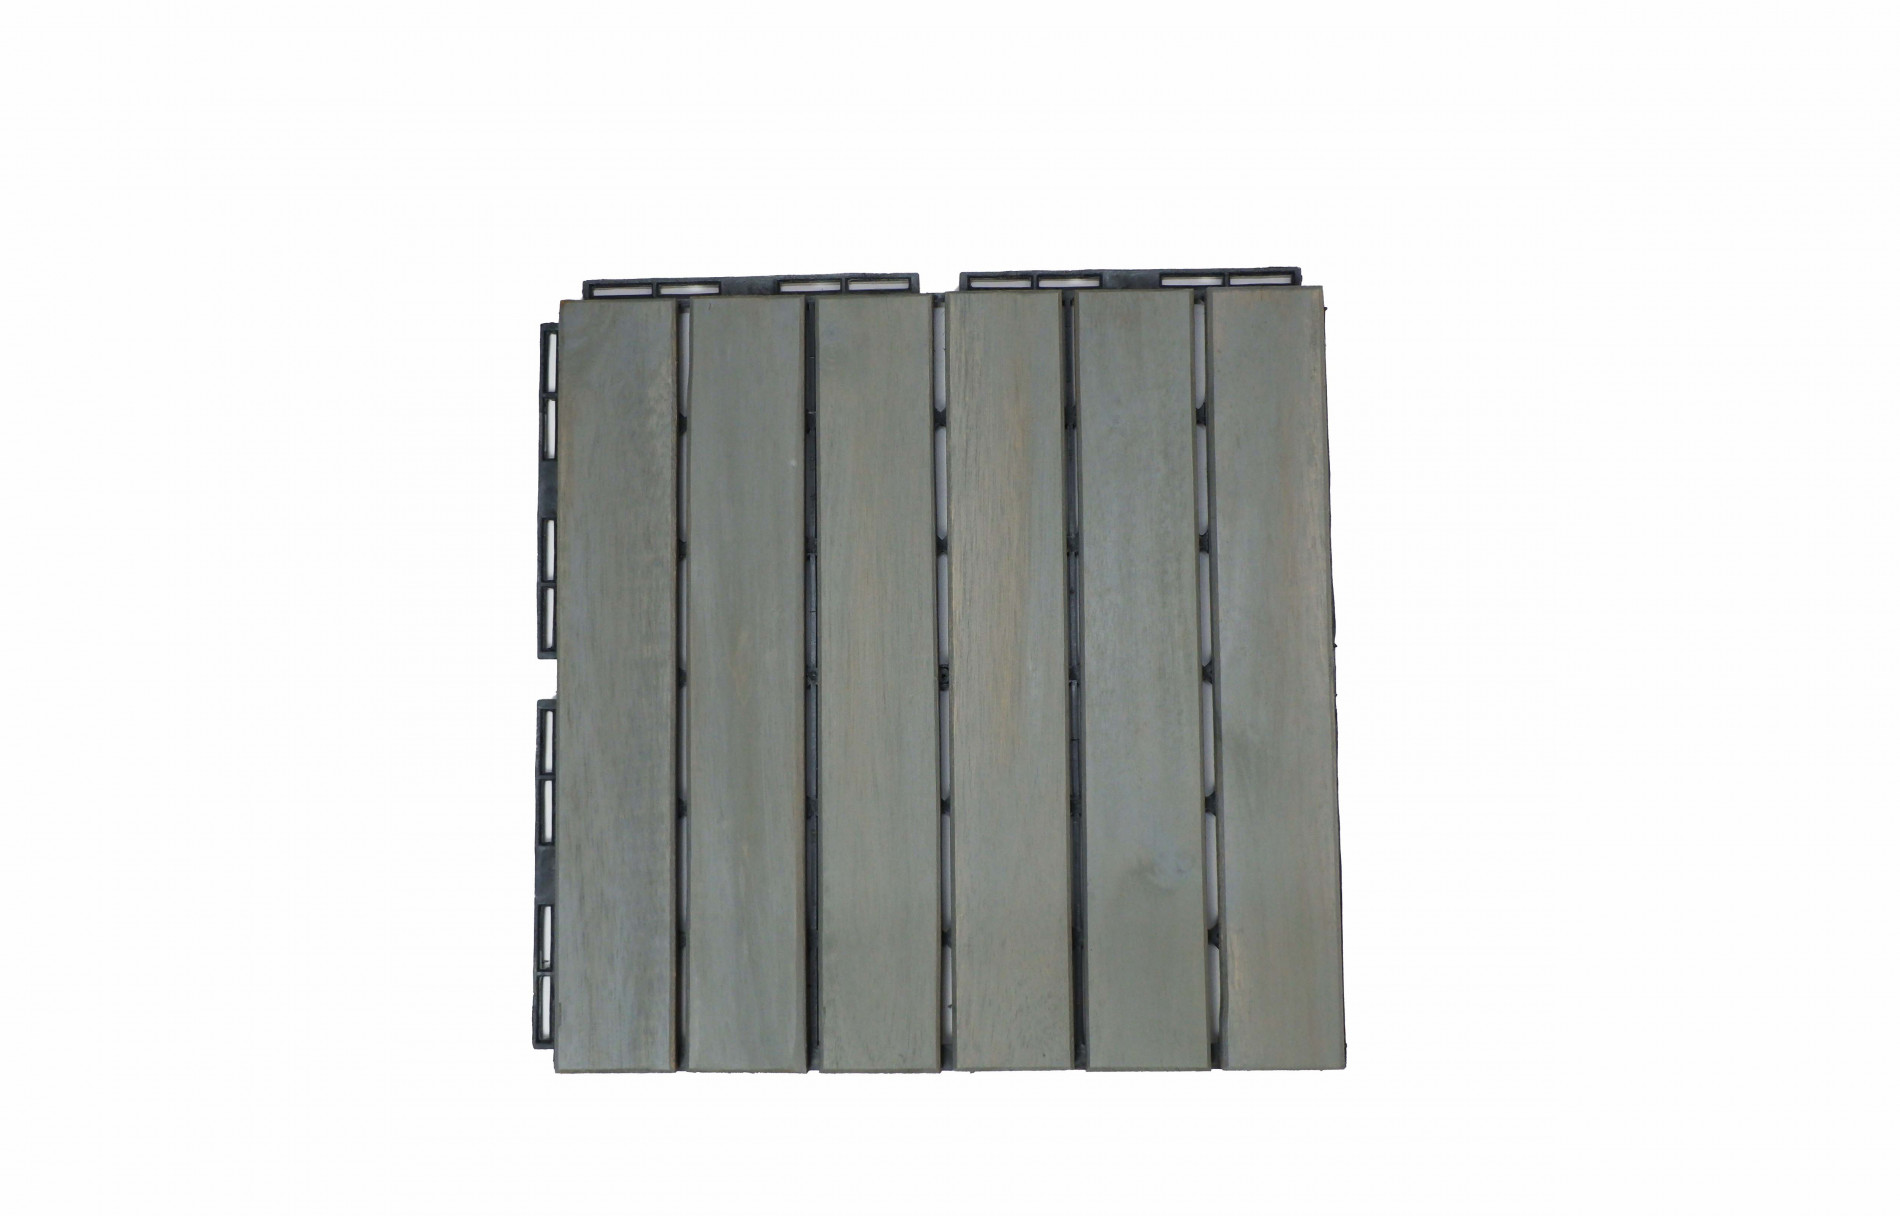 BEEFURNI 12" x 12" Light Gray Square Acacia Wood Interlocking Flooring Tiles Striped Pattern Pack of 10 Tiles